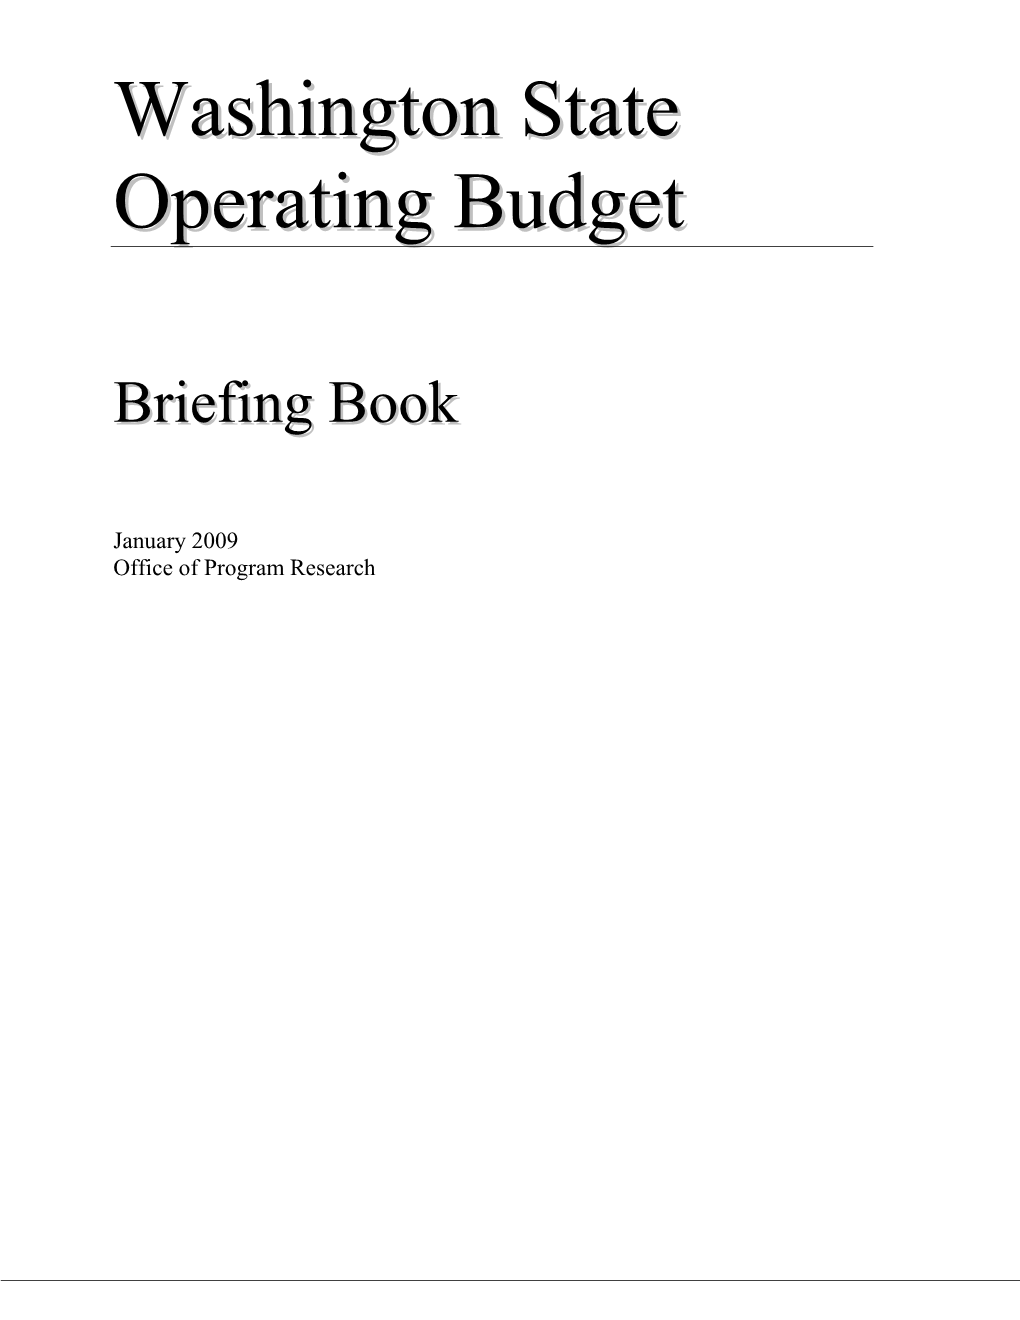 Washington State Operating Budget: Briefing Book